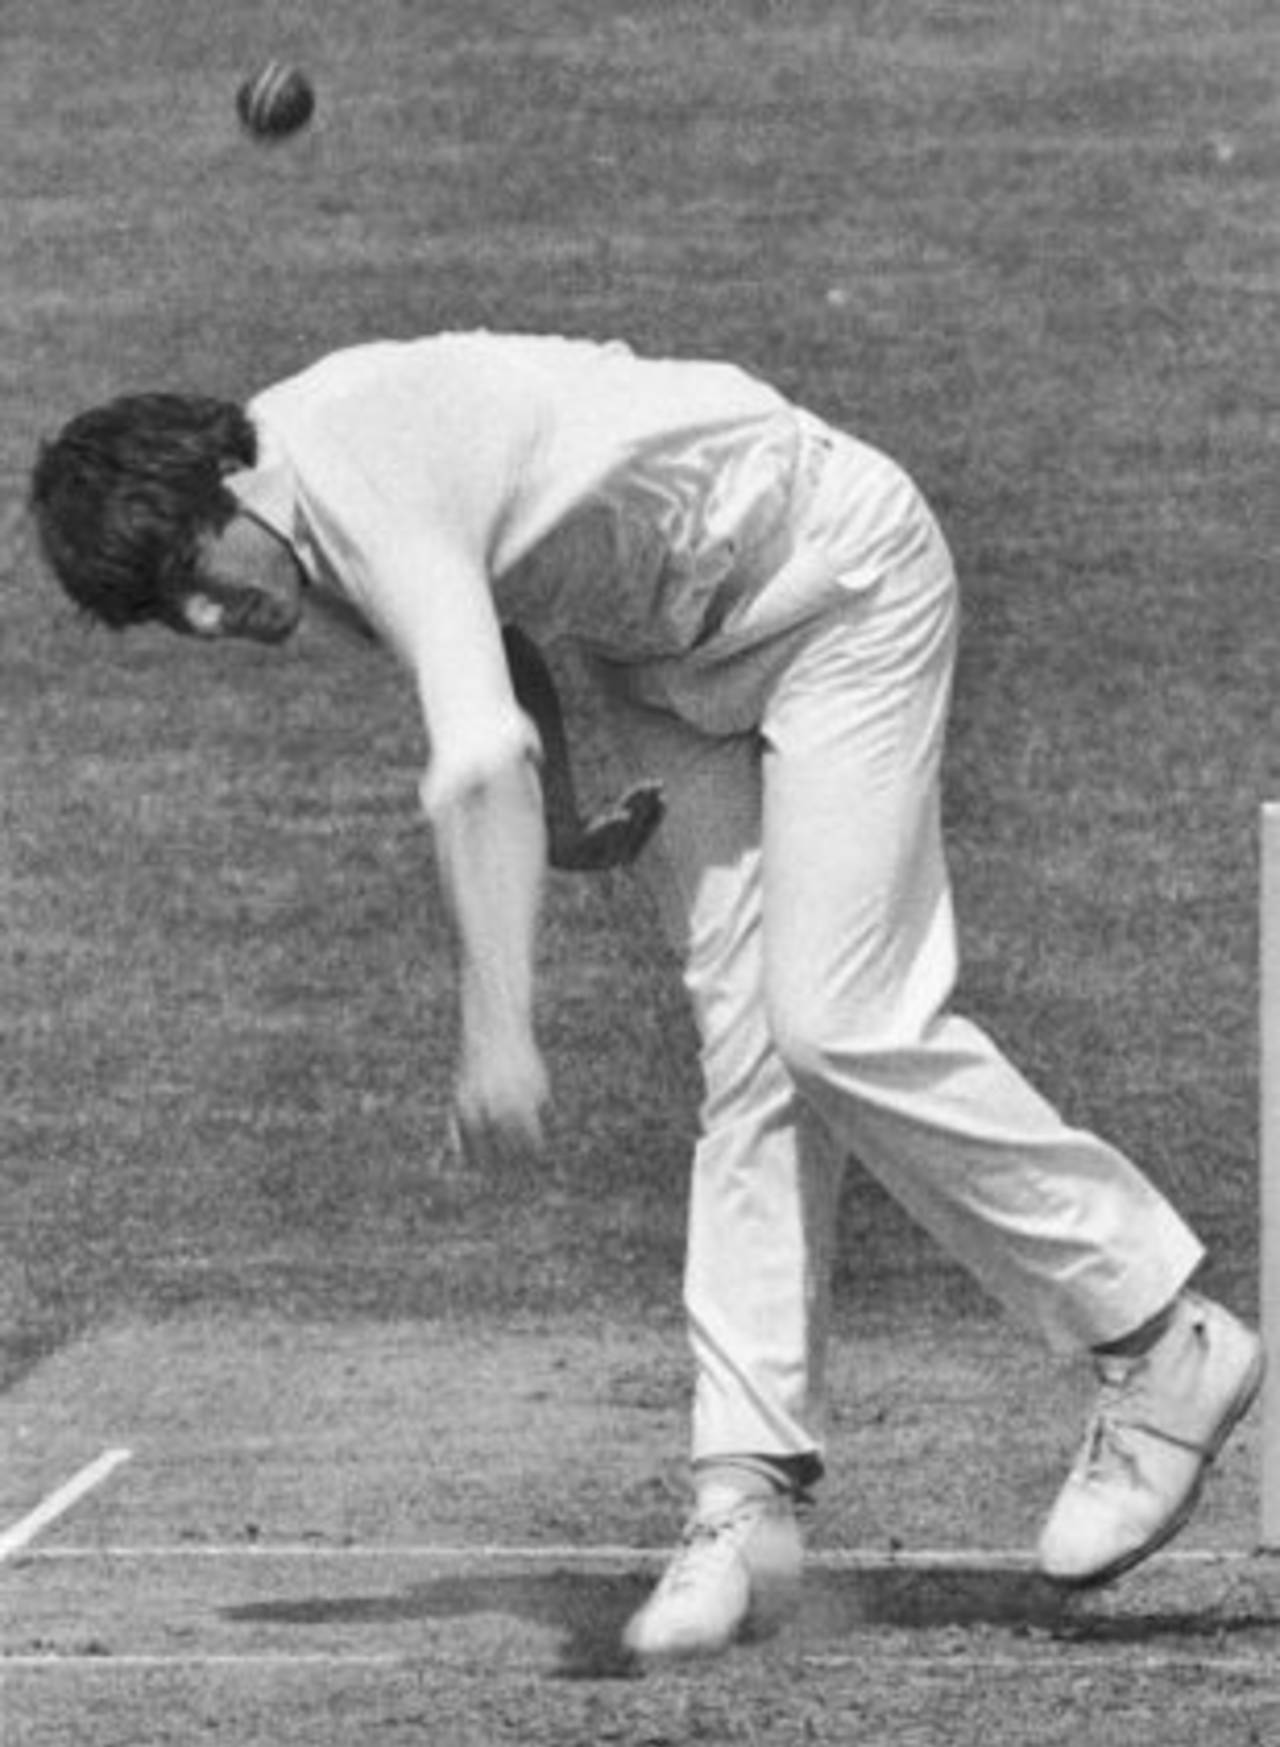 David Thomas in action for Surrey, June 6, 1978